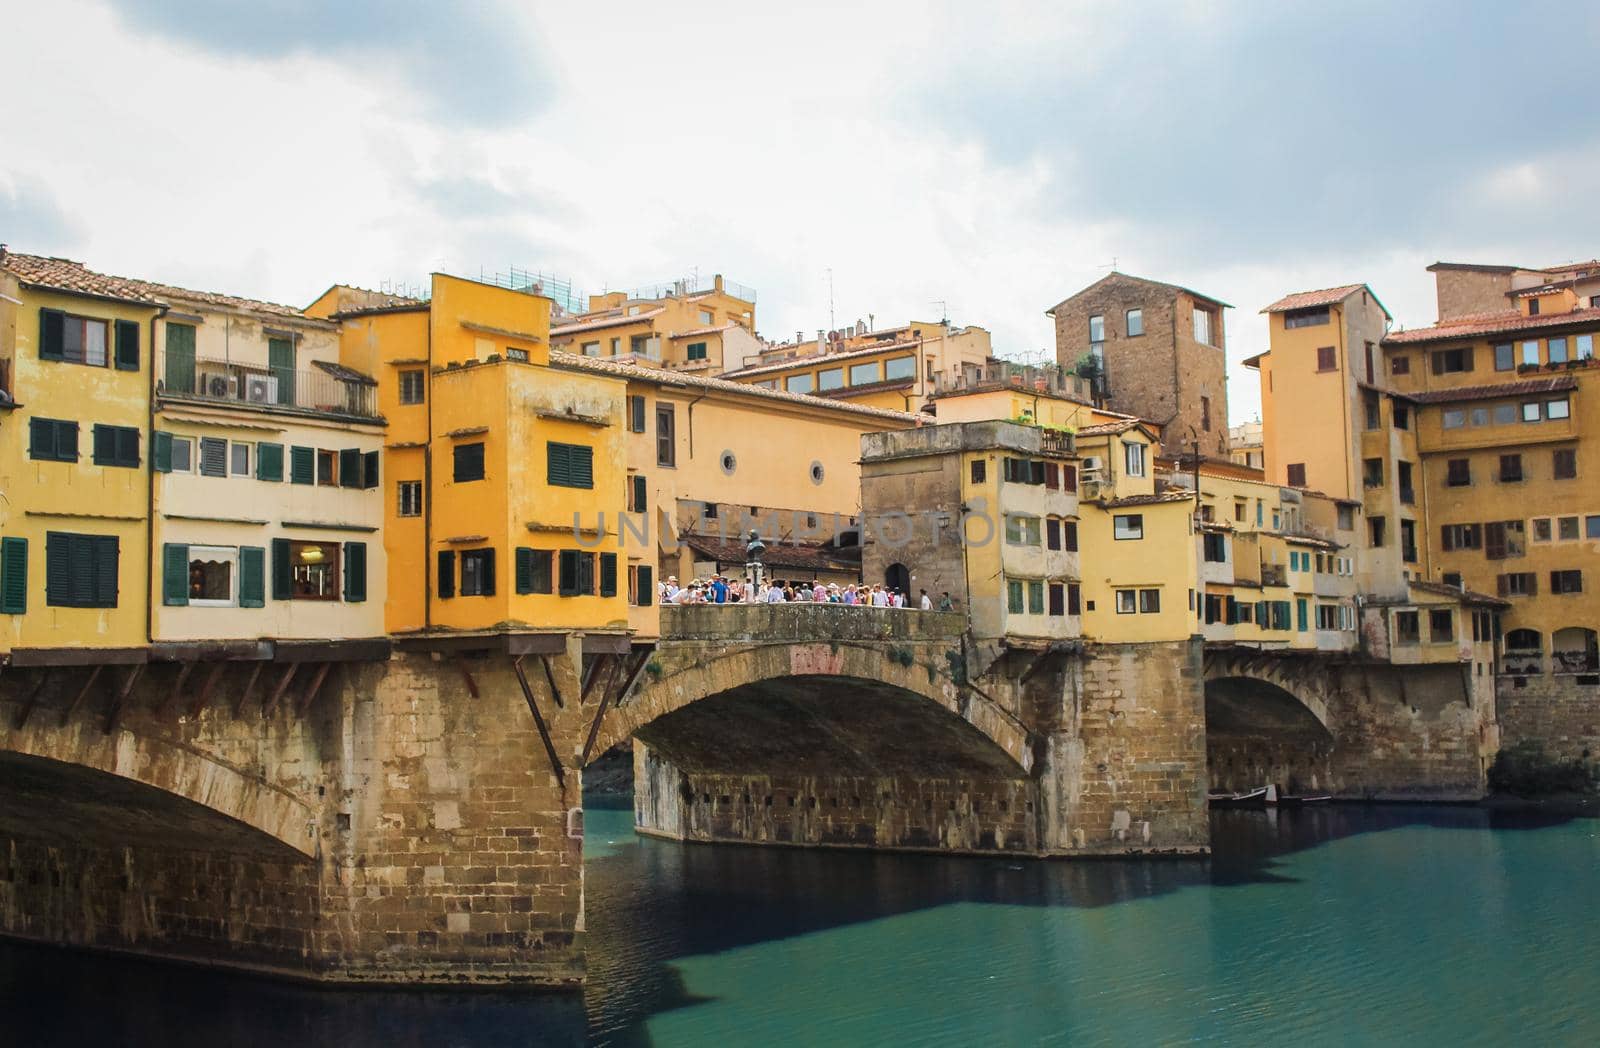 Colourful 'Ponte Vecchio' bridge, centre of Florence, Italy. by olifrenchphoto